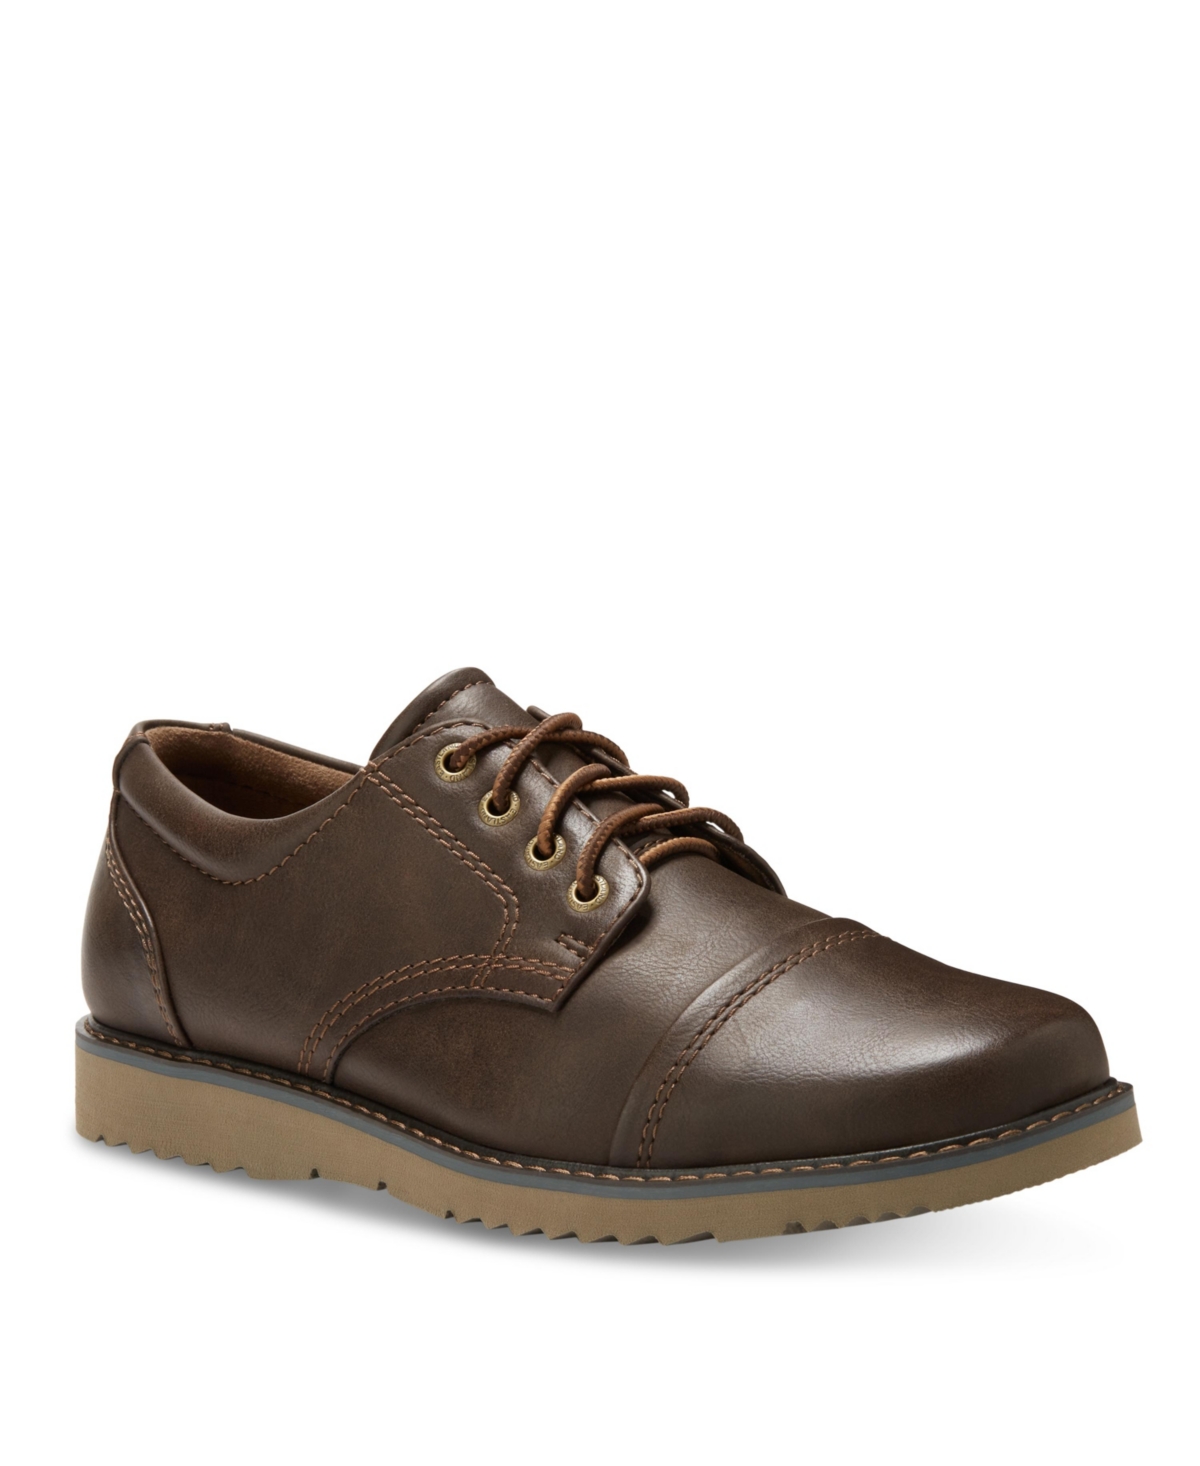 Men's Ike Cap Toe Oxford Shoes - Brown